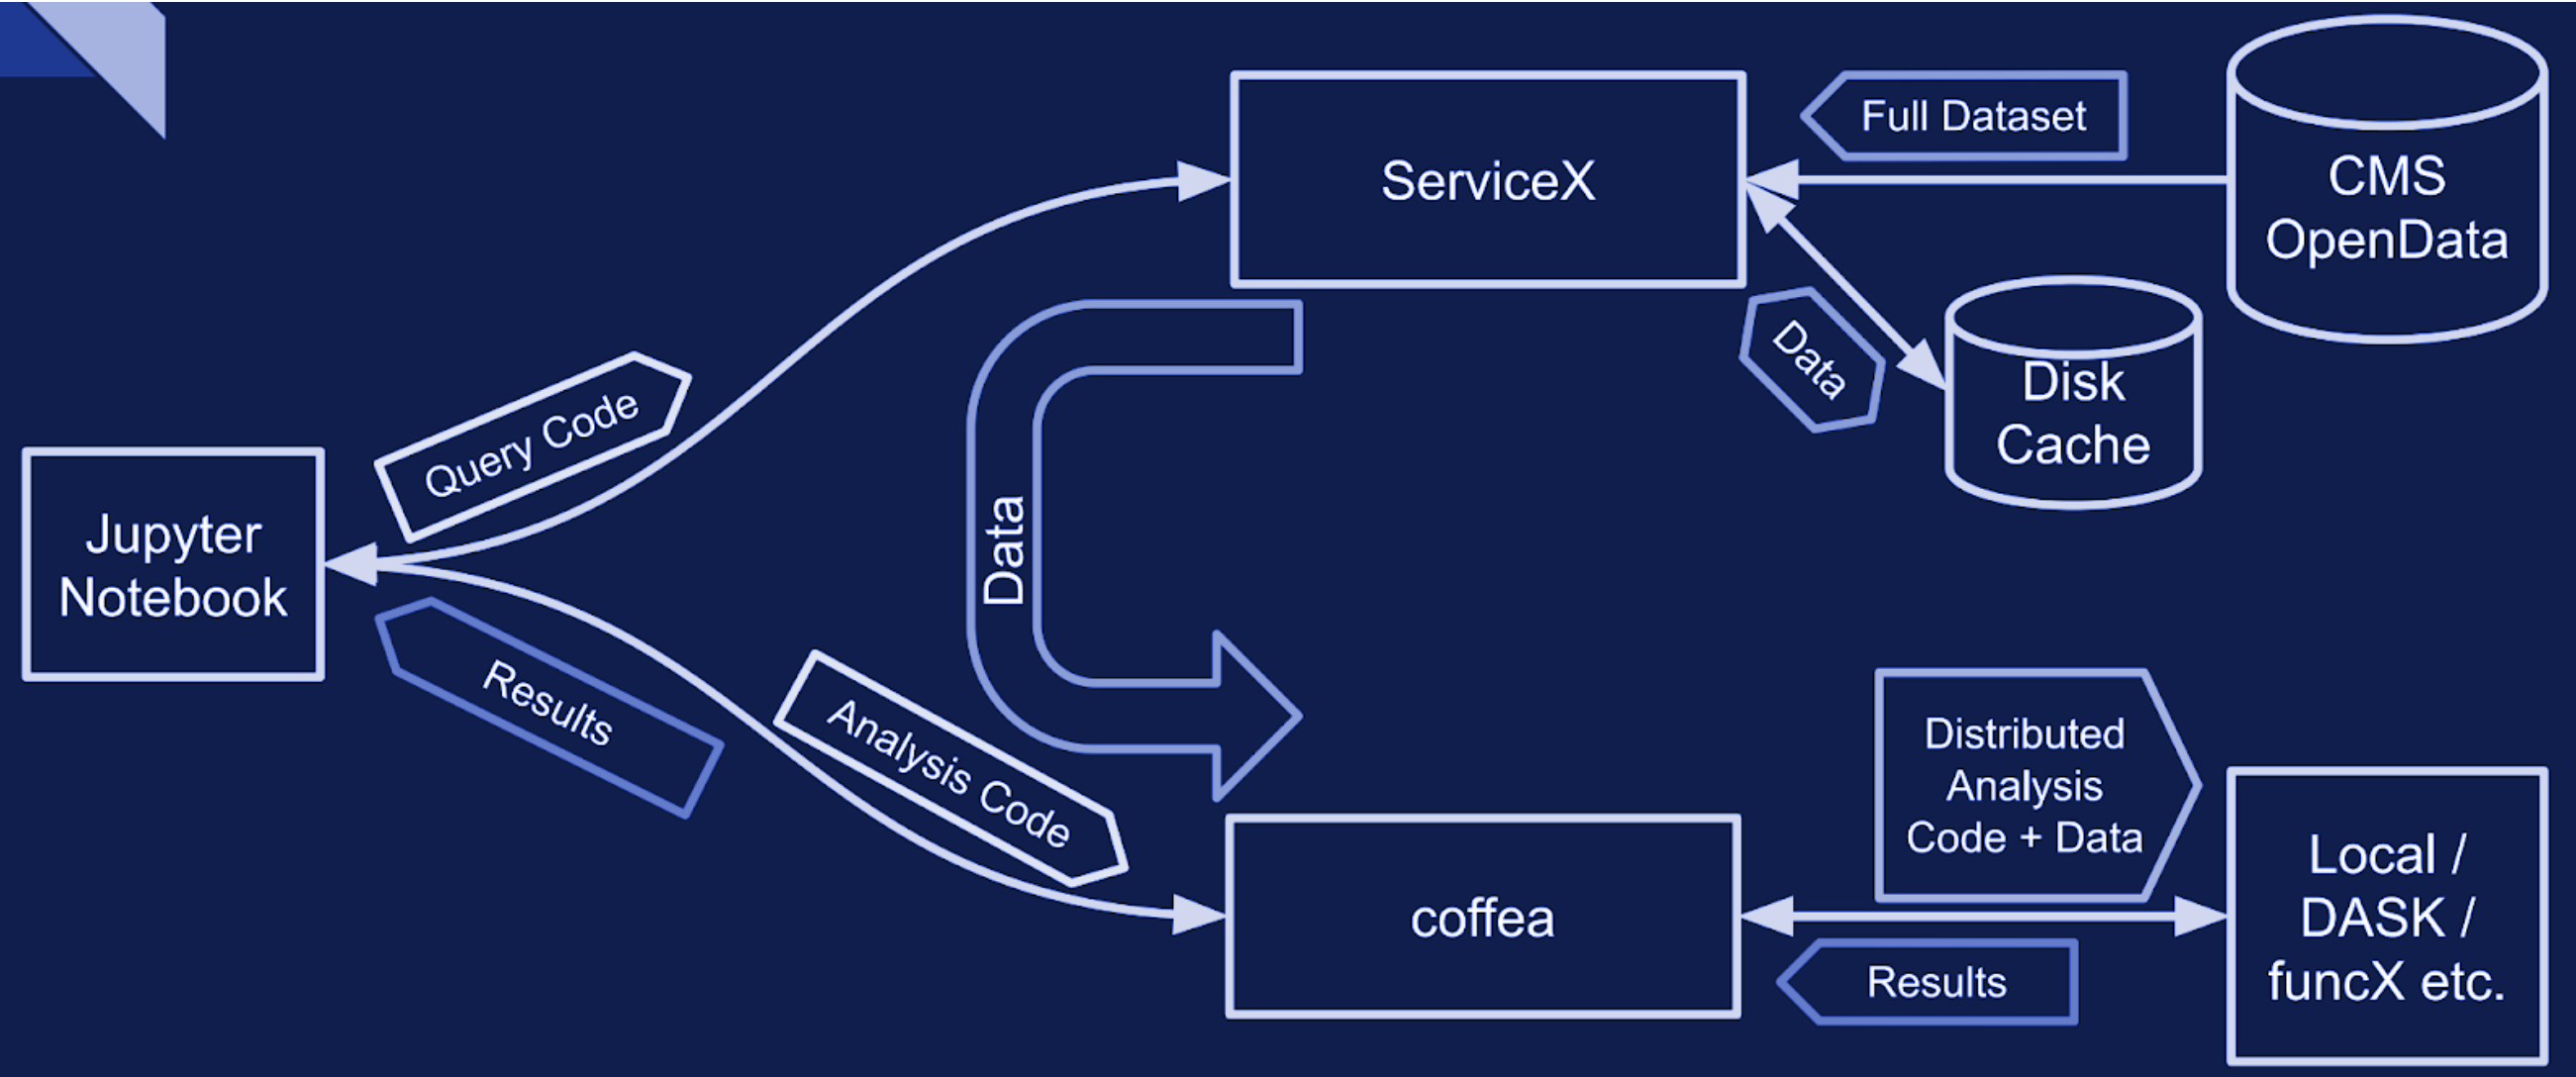 ServiceX and Coffea-Casa workflow schema.